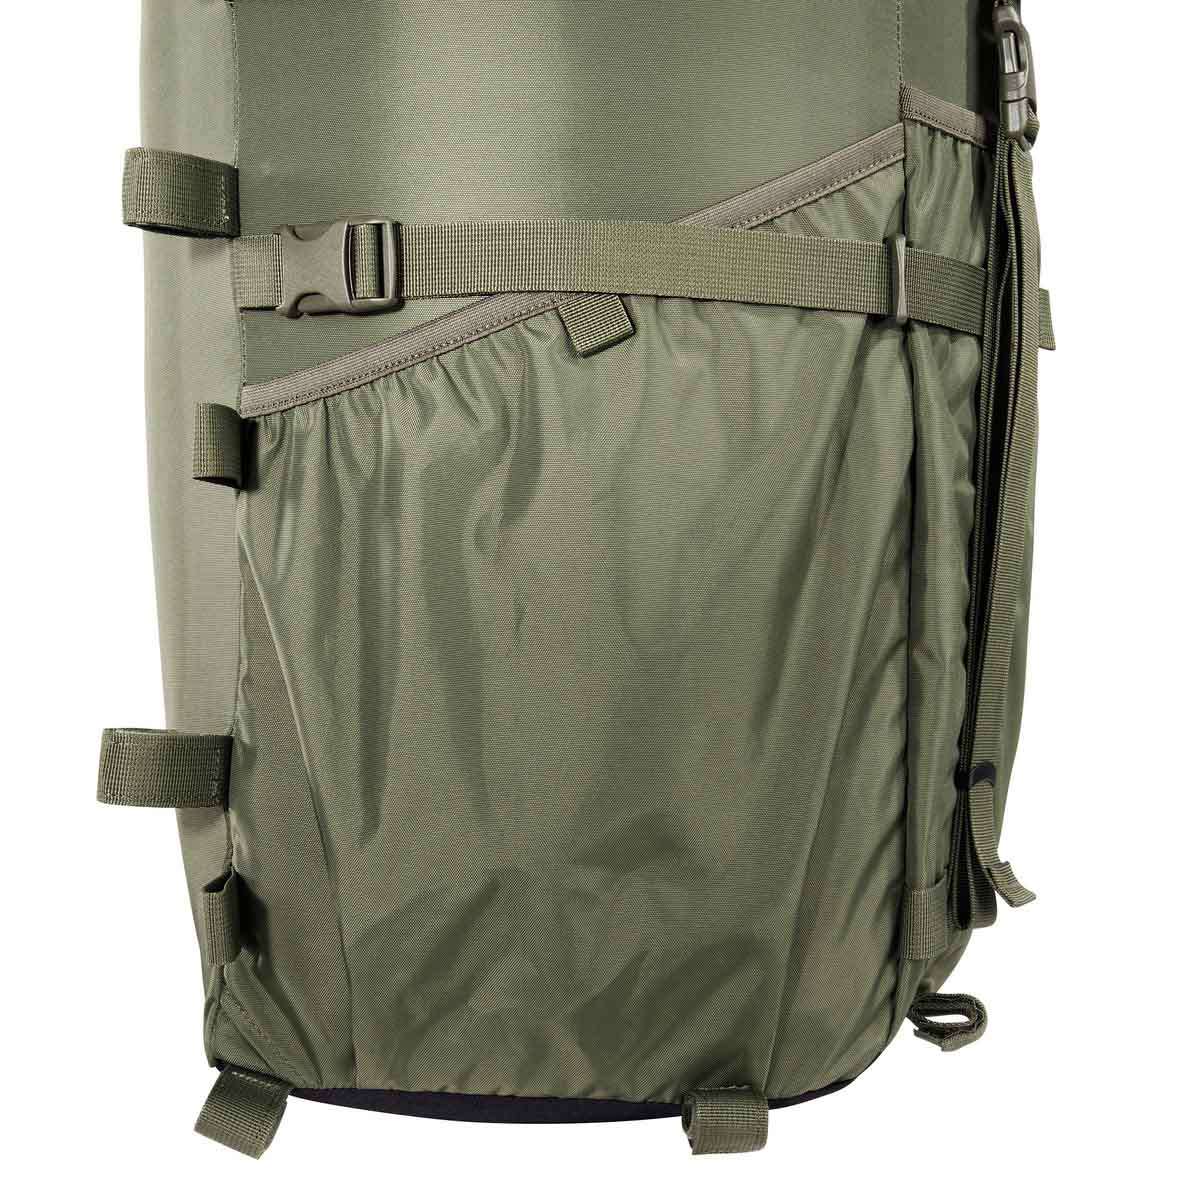 Tatonka Packsack 2 Lastenkraxe 80L Backpack - OD Green